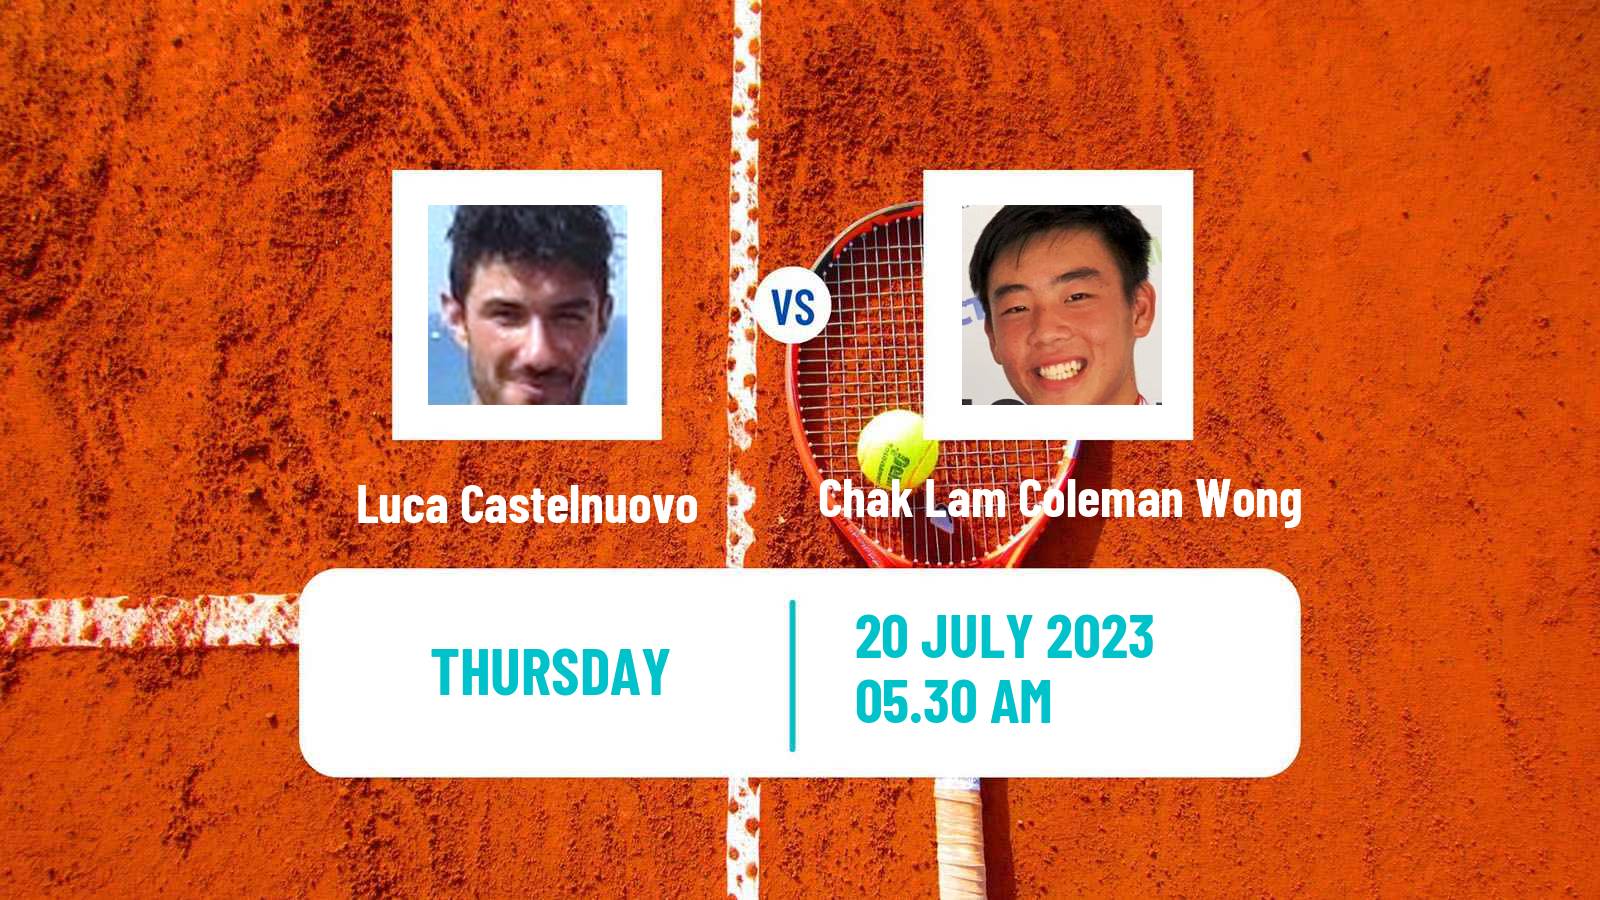 Tennis ITF M25 Fuzhou Men Luca Castelnuovo - Chak Lam Coleman Wong